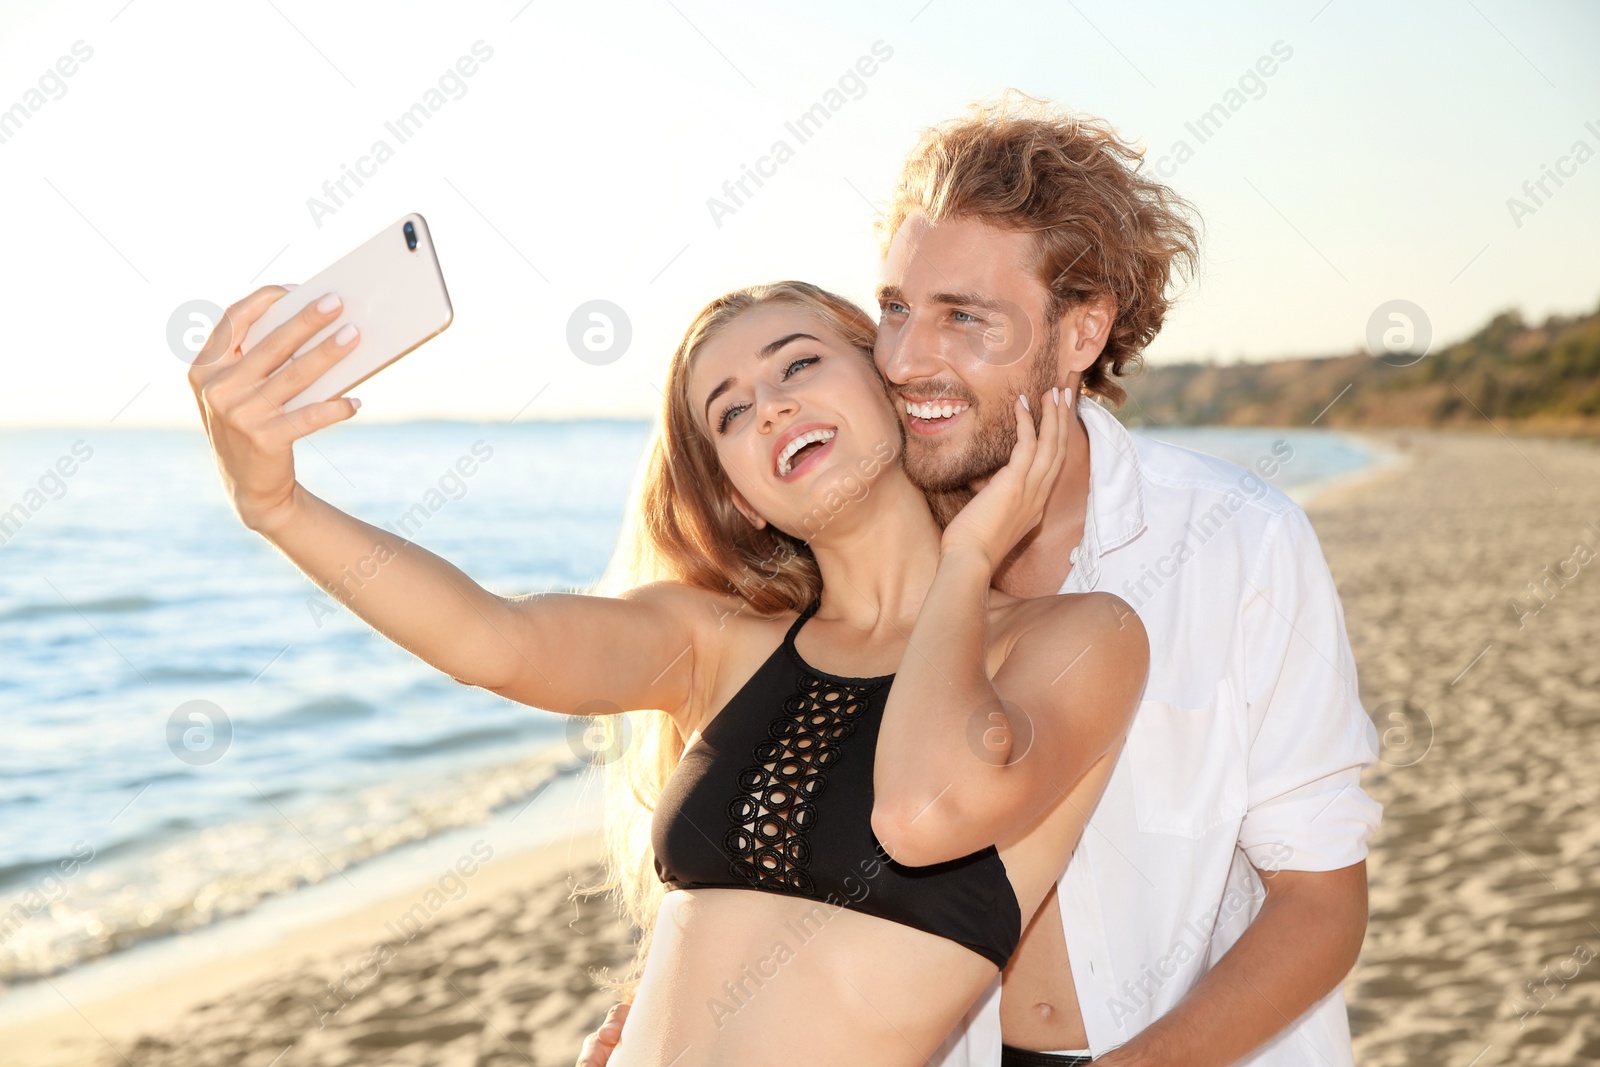 Photo of Happy young couple in beachwear taking selfie on seashore